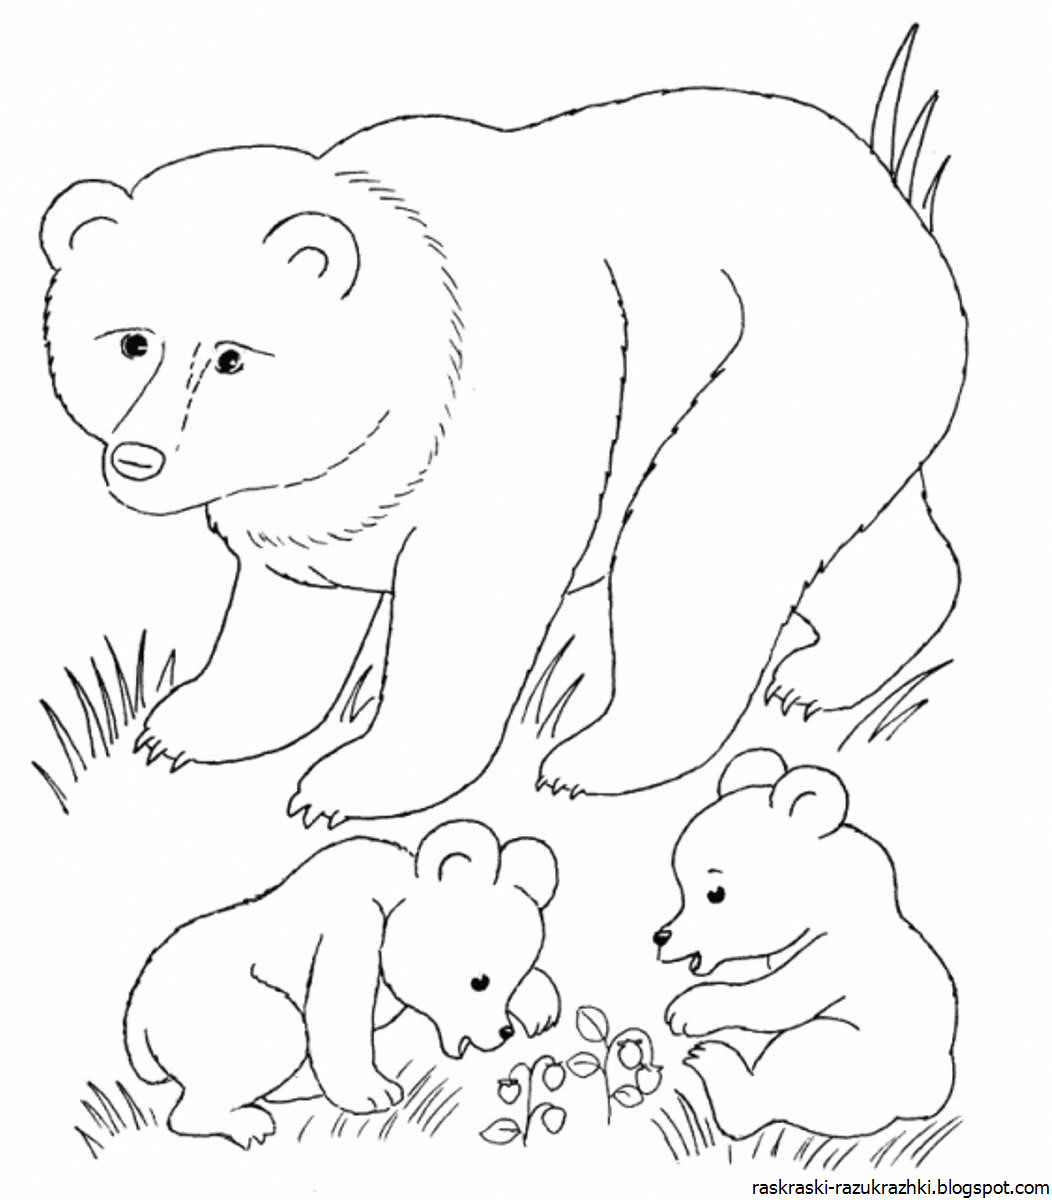 Раскраски животных для детей 4 5. Раскраски животные для детей. Медведь раскраска. Раскраска "Дикие животные". Медведь картинка для детей раскраска.